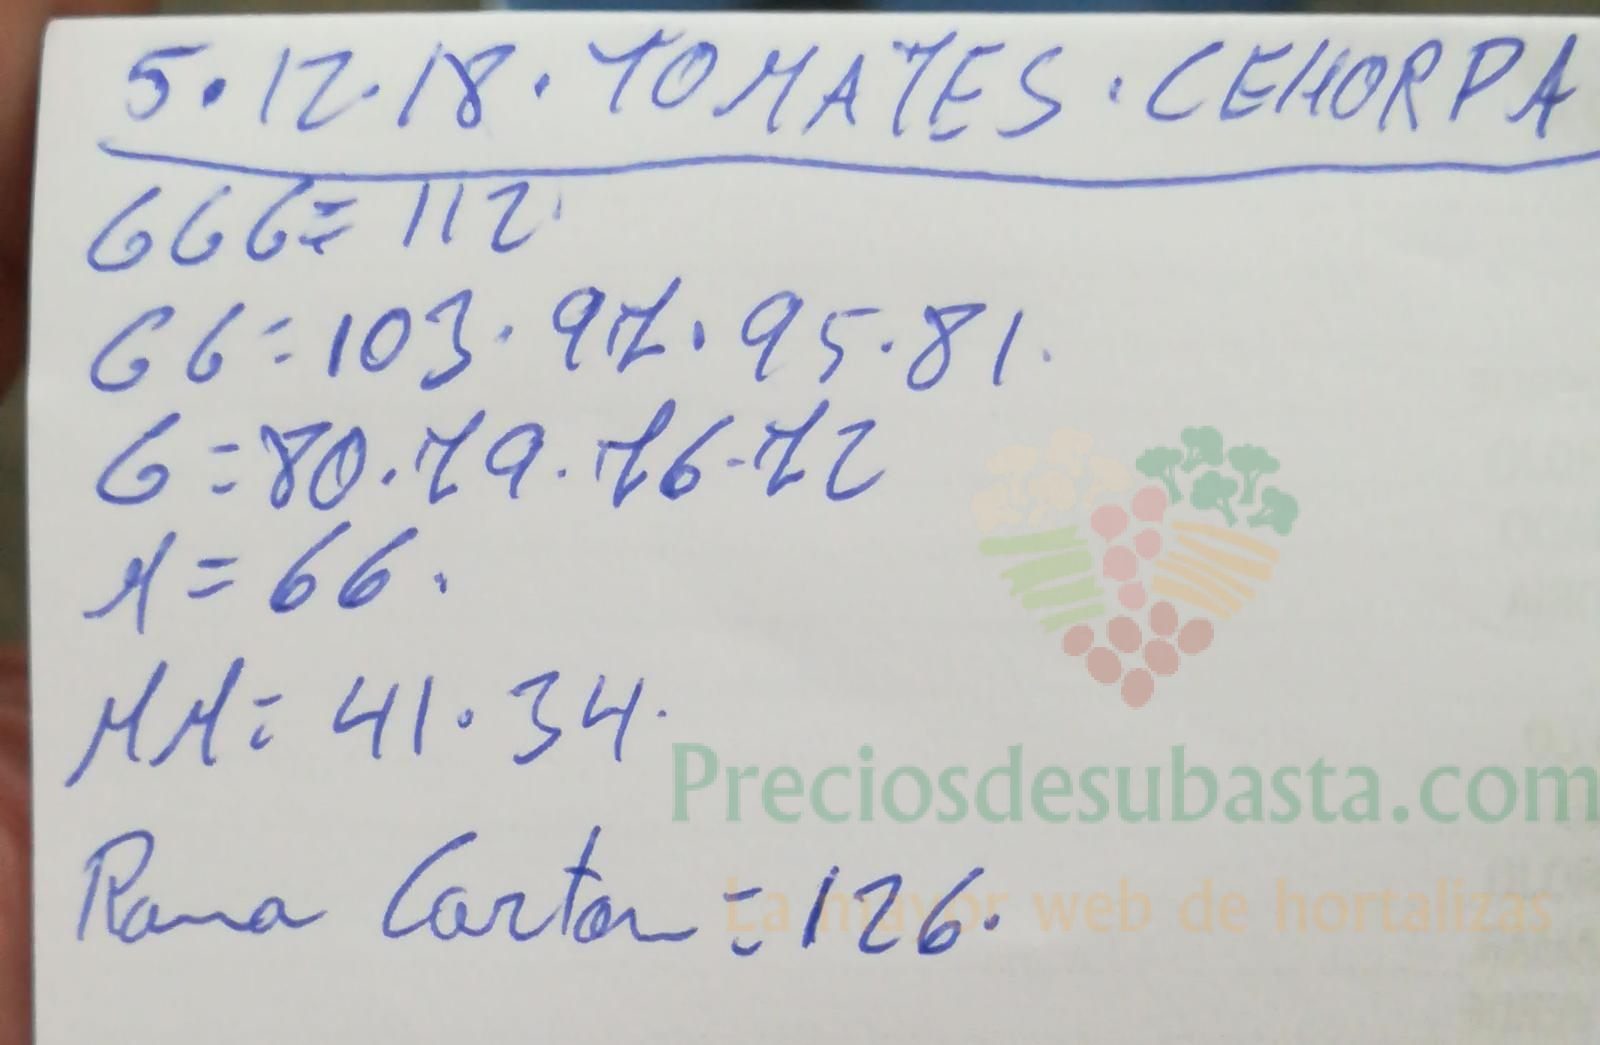 Subasta Costa de Almería Cehorpa Tomates 5 de Diciembre